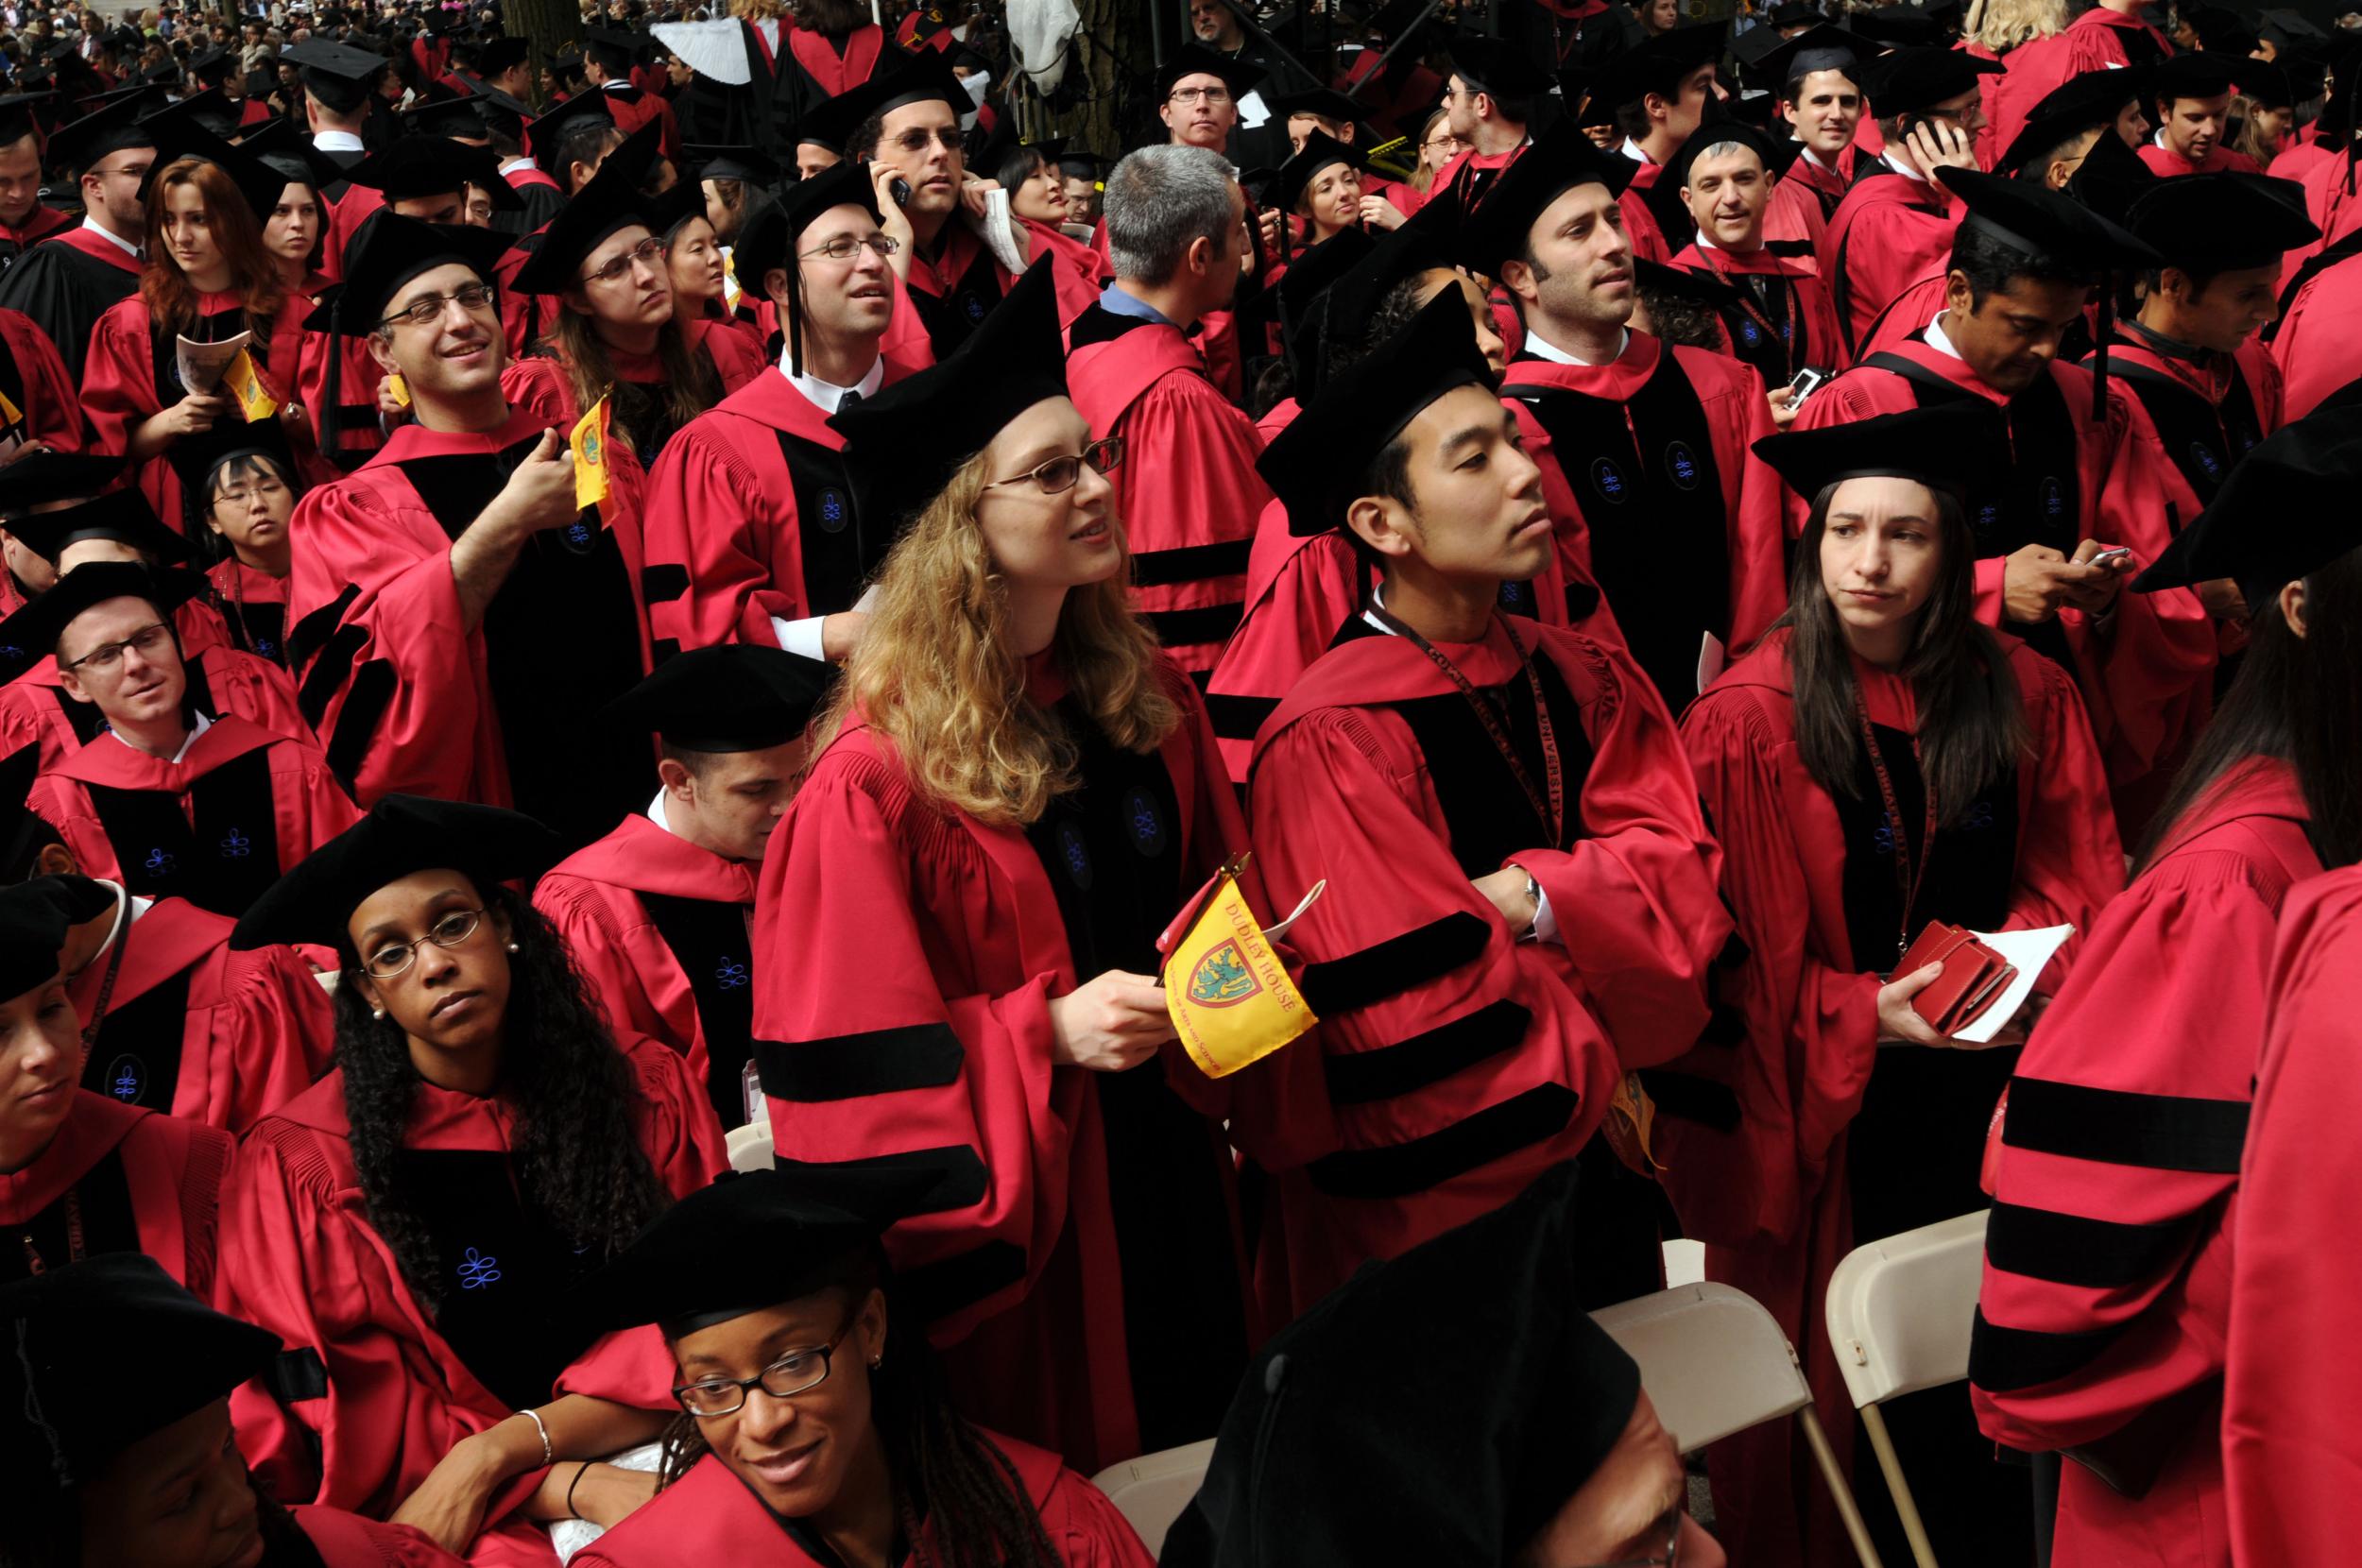 Harvard University students attend graduation ceremonies in 2009